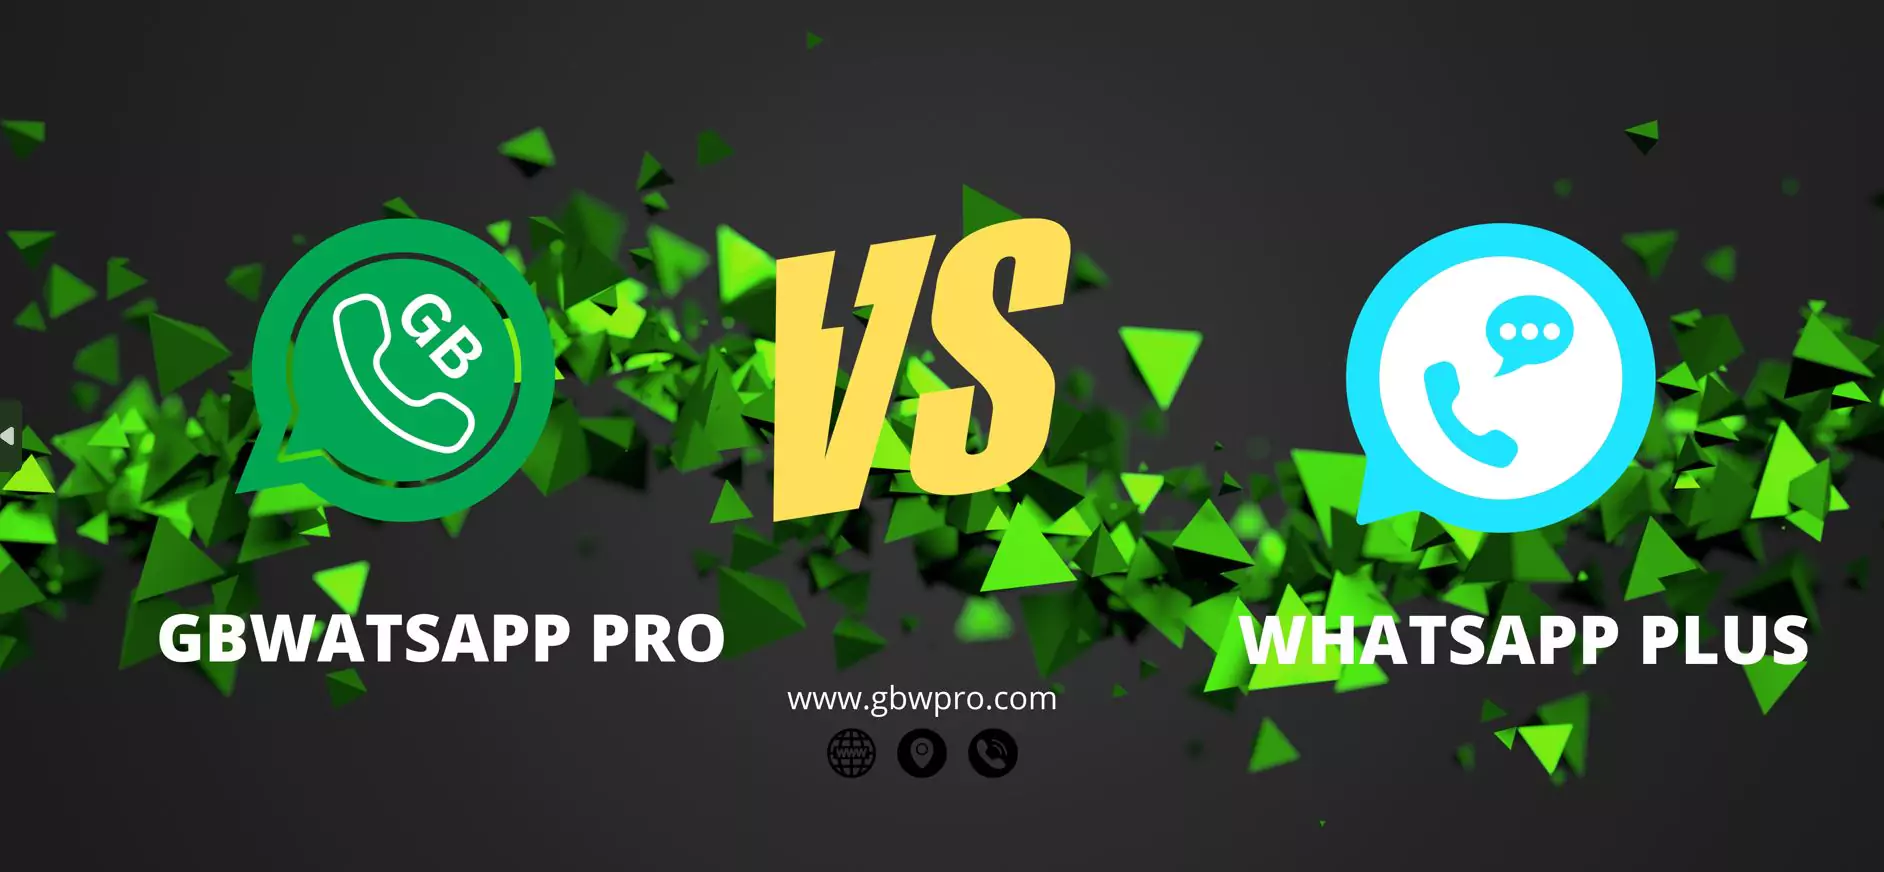 WhatsApp Plus and GBWhatsApp Pro